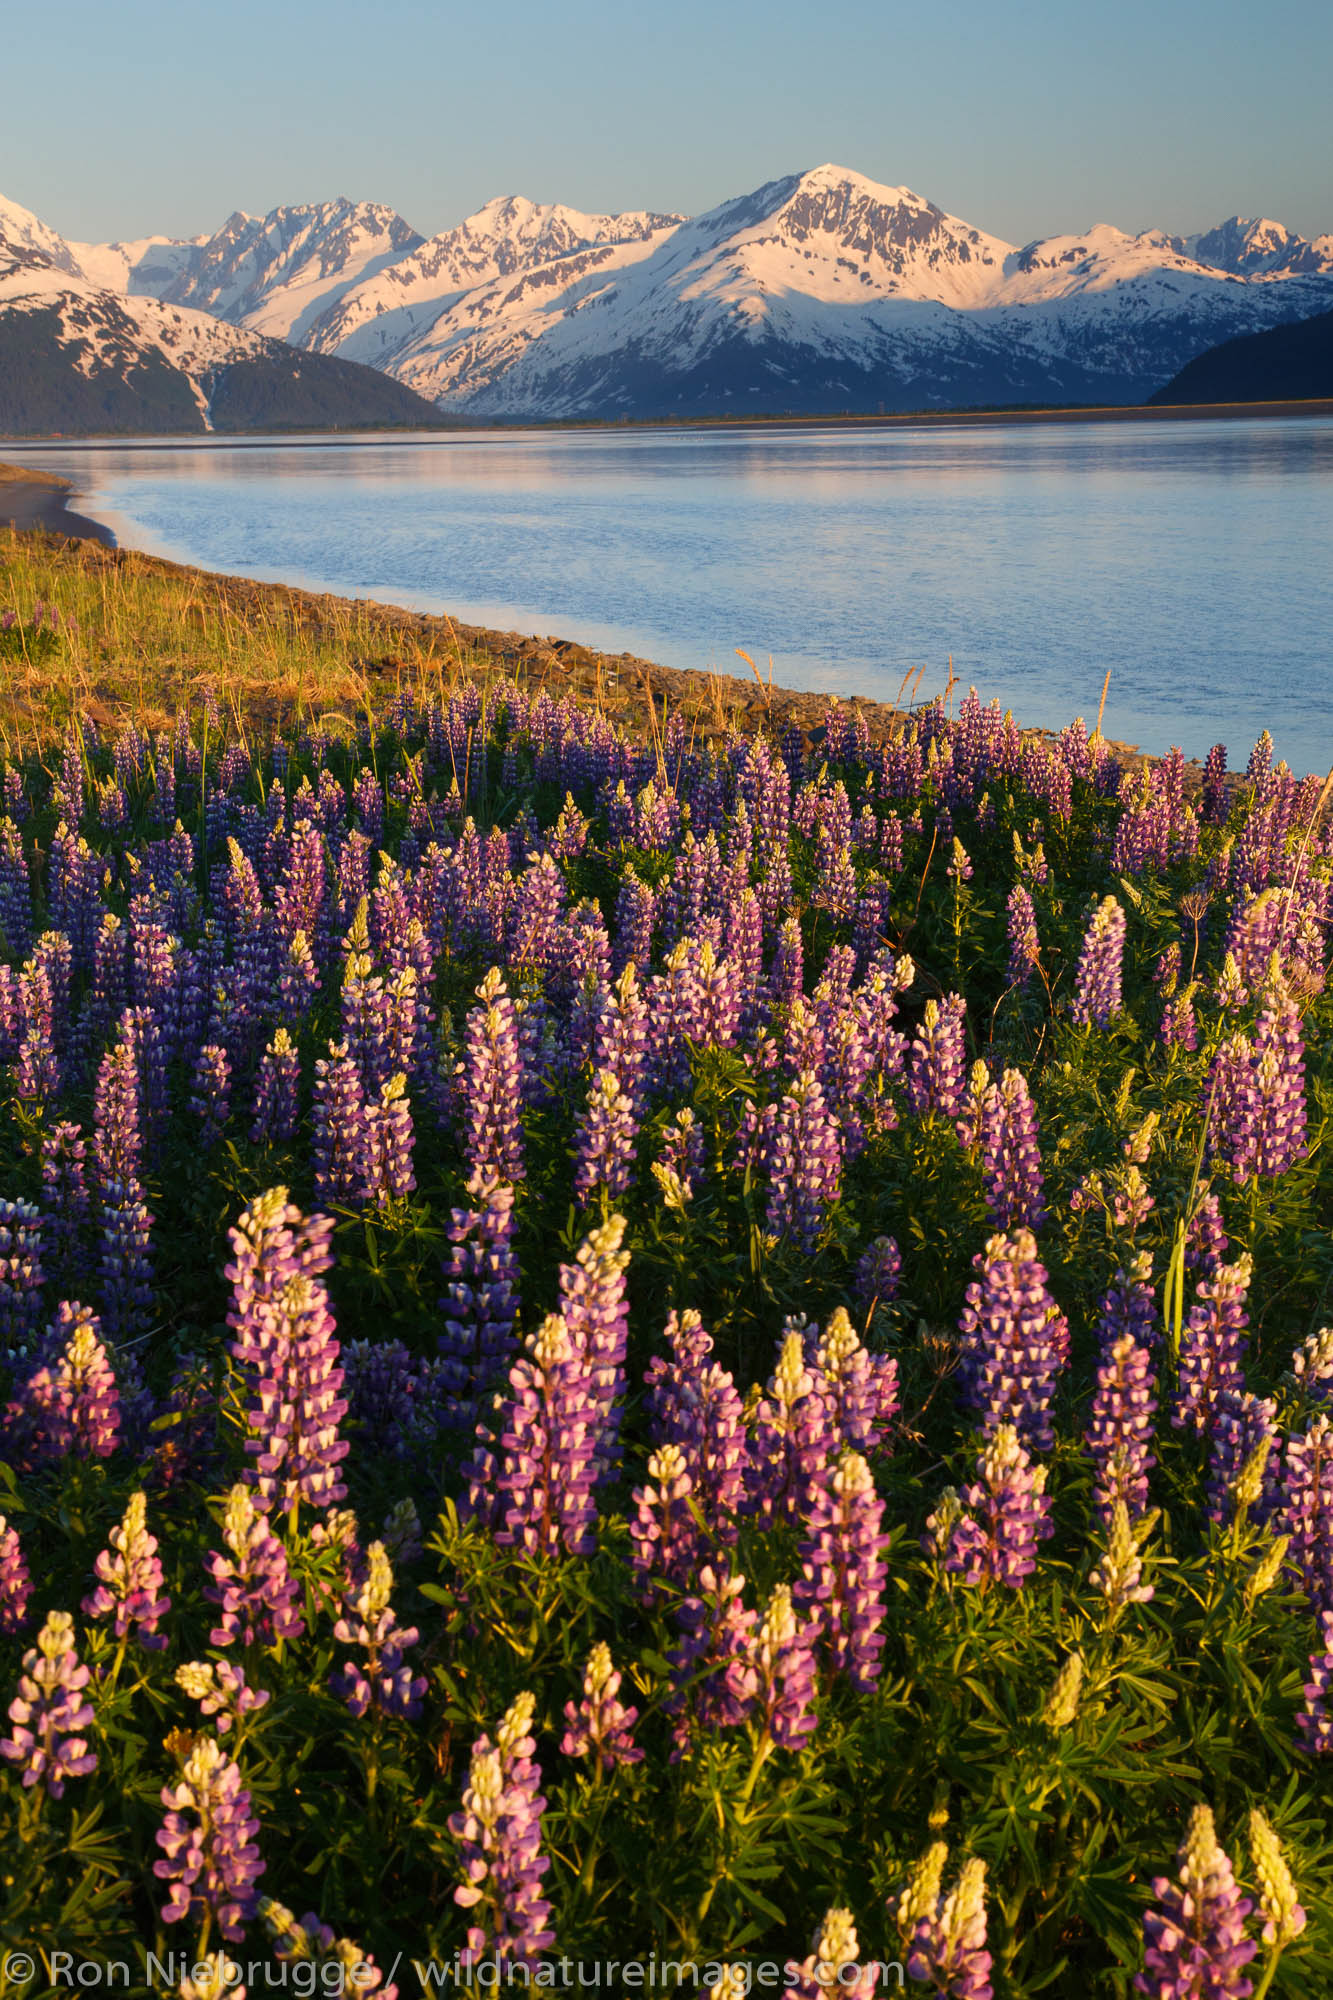 Field of Lupine wildflowers along Turnagain Arm, Chugach National Forest, Alaska.